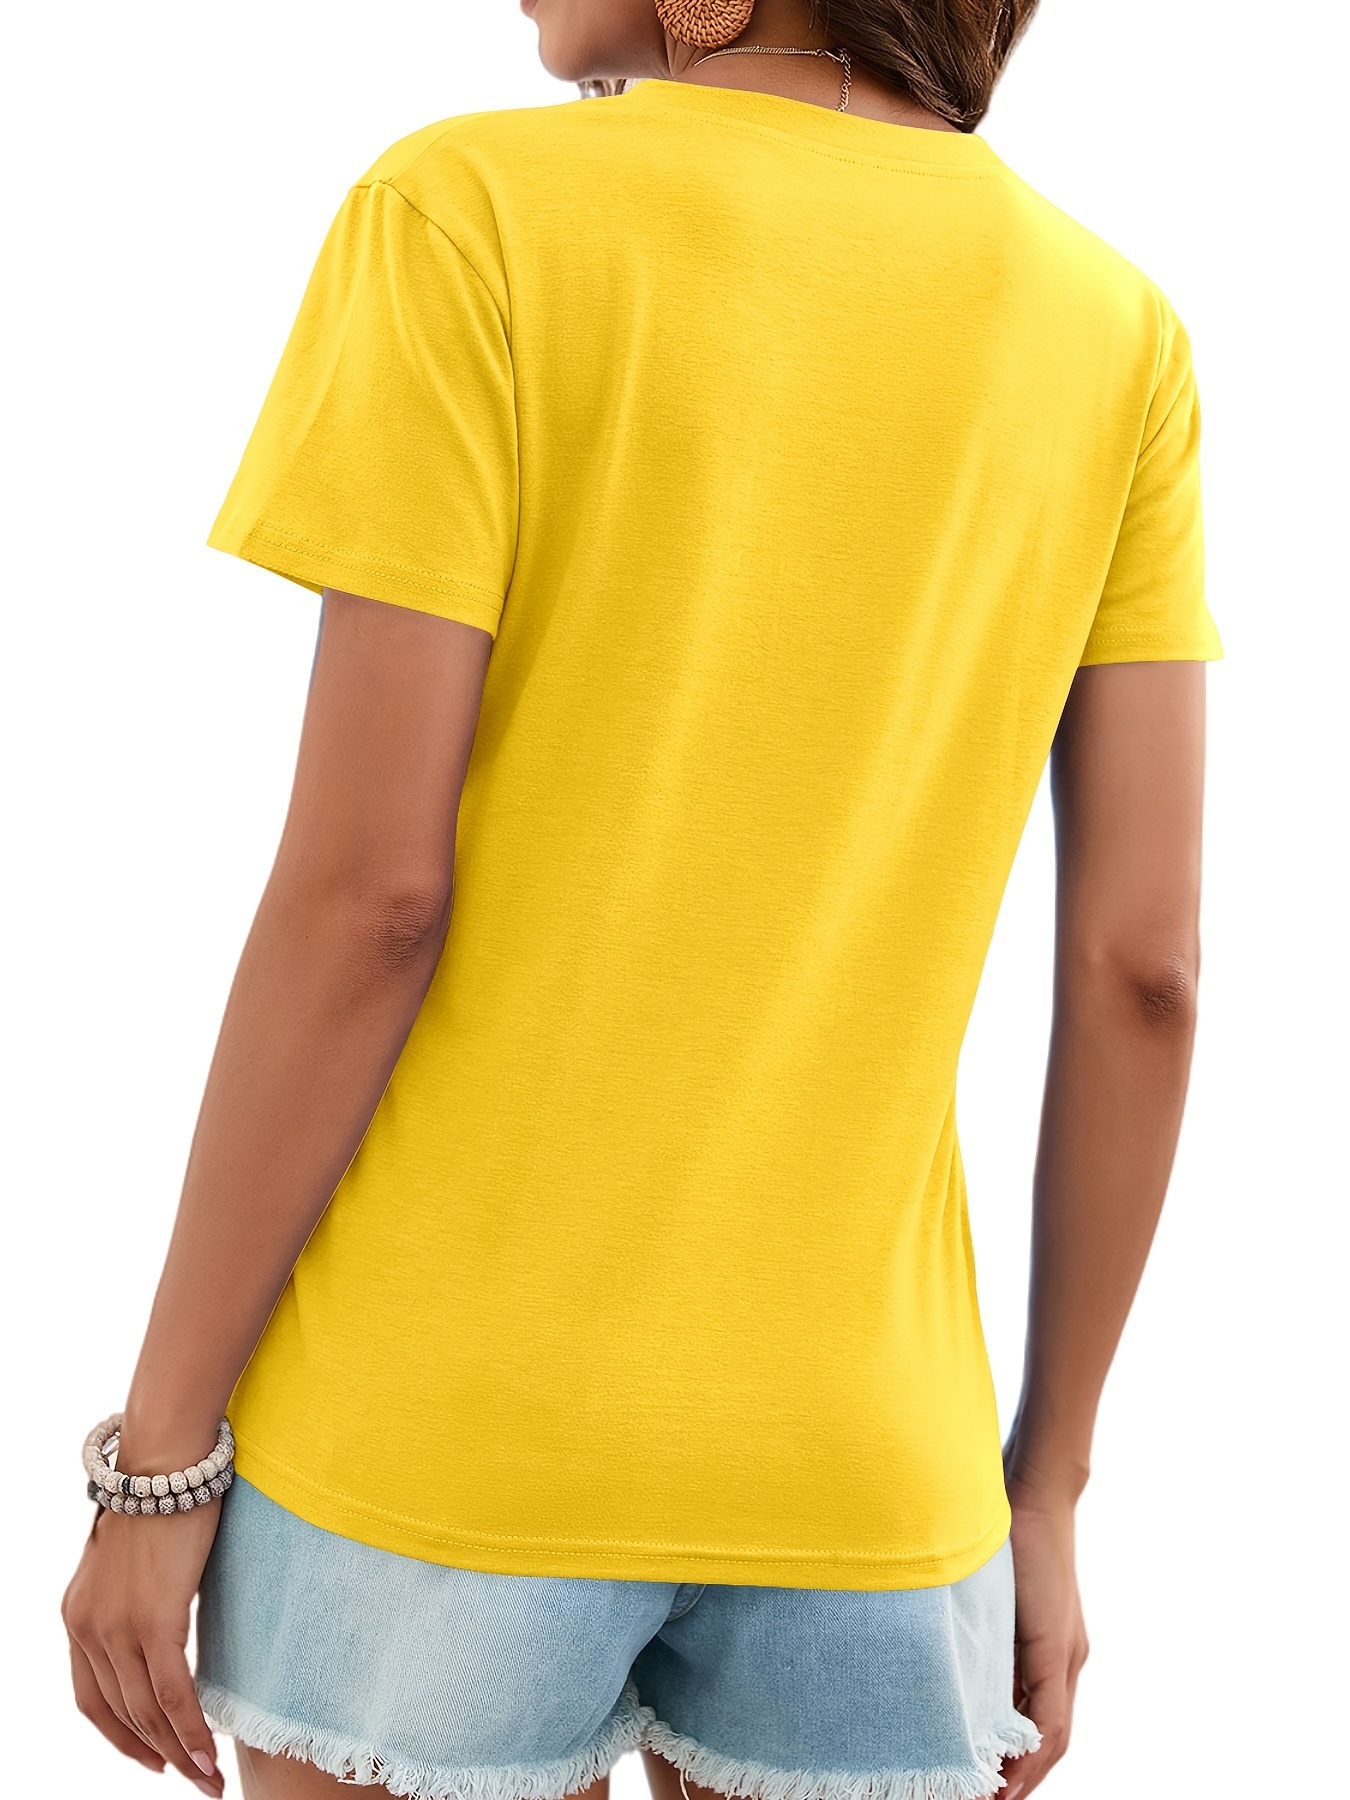 Camiseta amarilla de manga larga con cuello redondo para mujer, Top  informal a la moda, camiseta de moda para fiesta joven